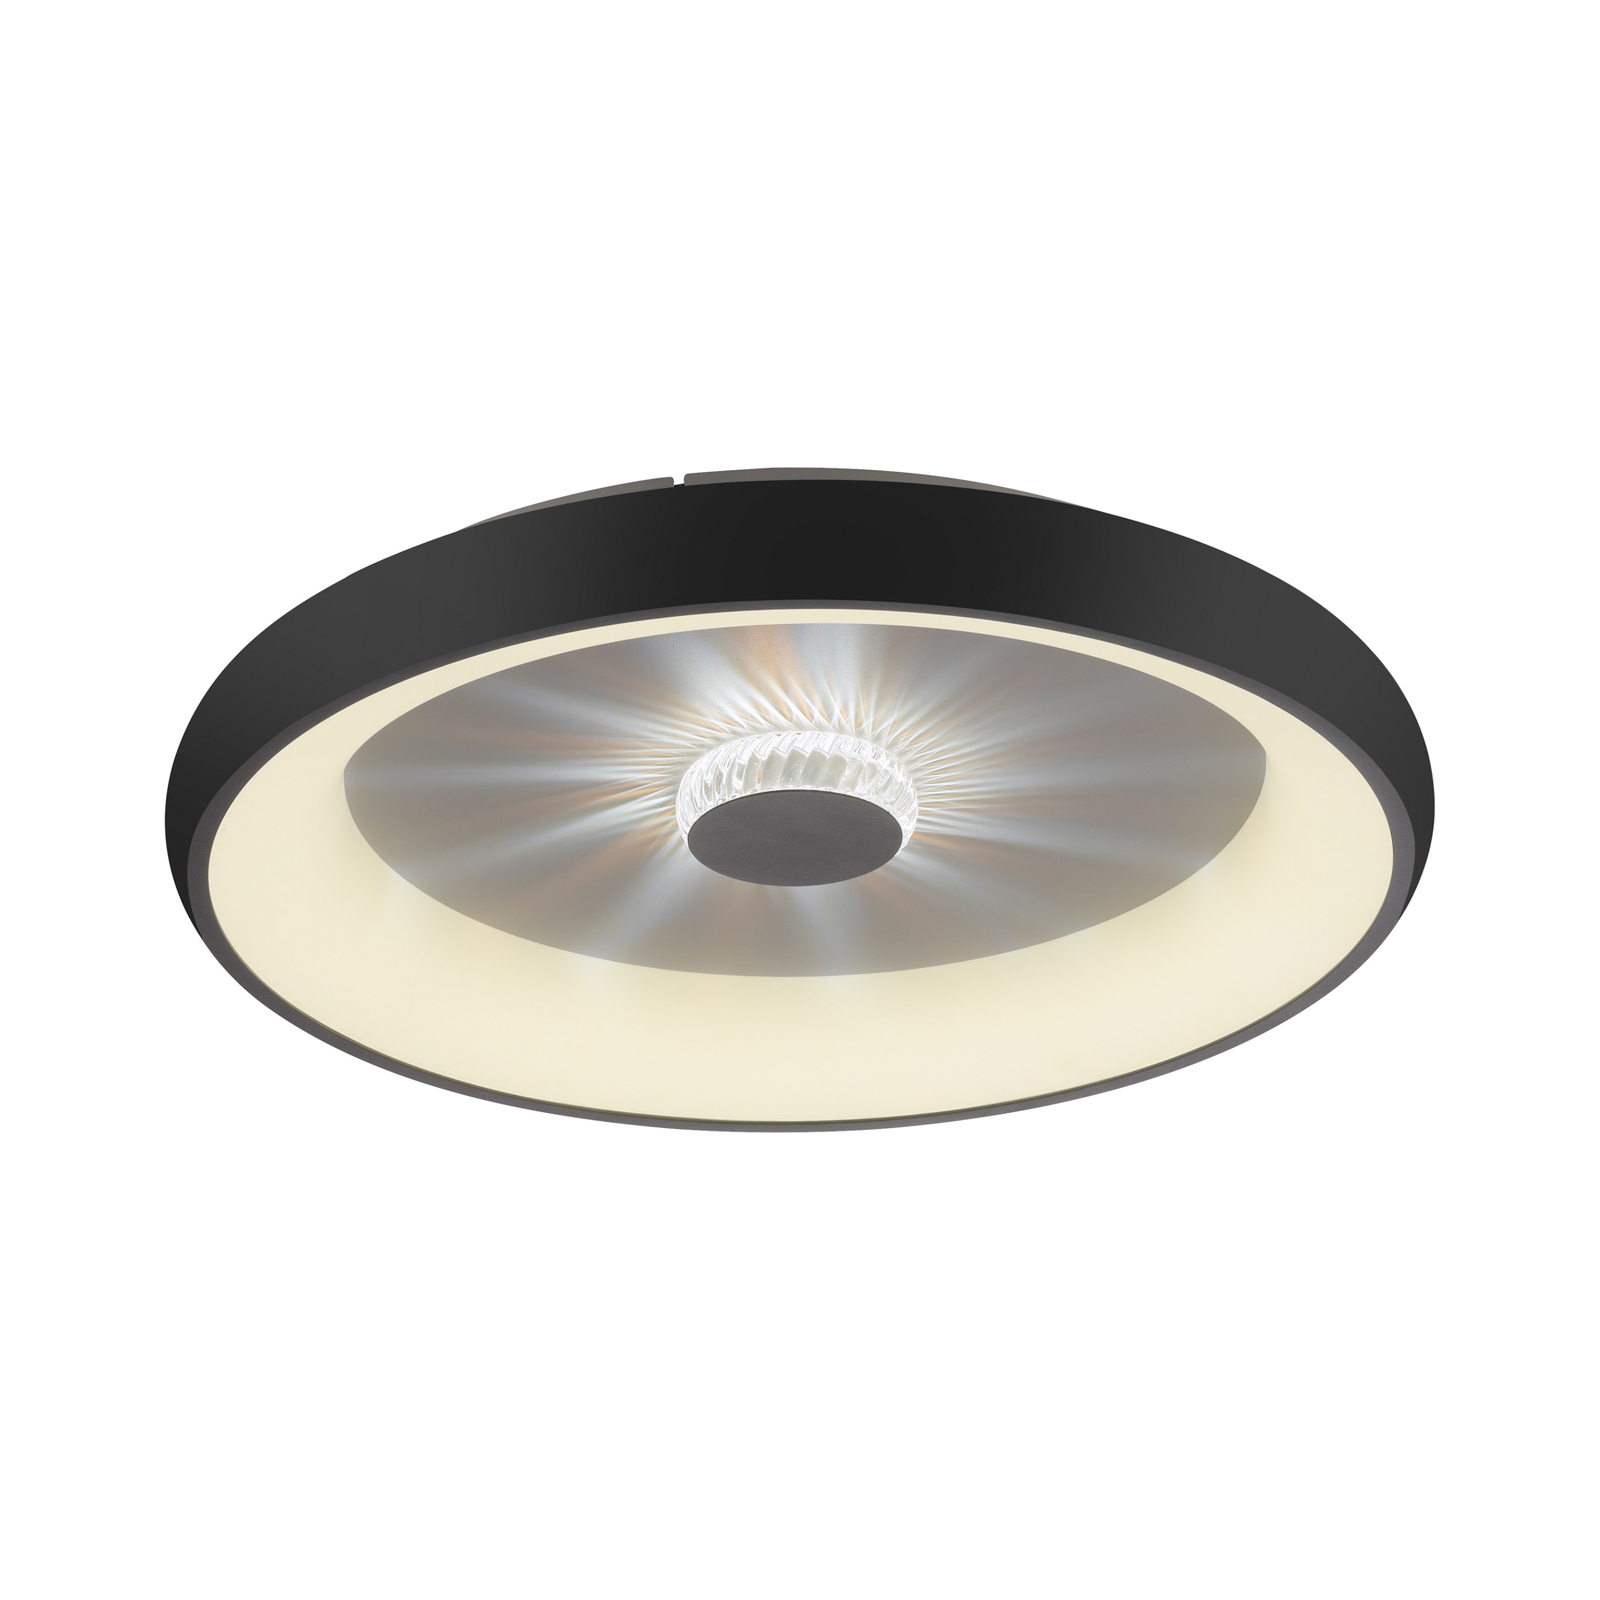 Stropní svítidlo Vertigo LED, CCT, Ø 61,5 cm, černé